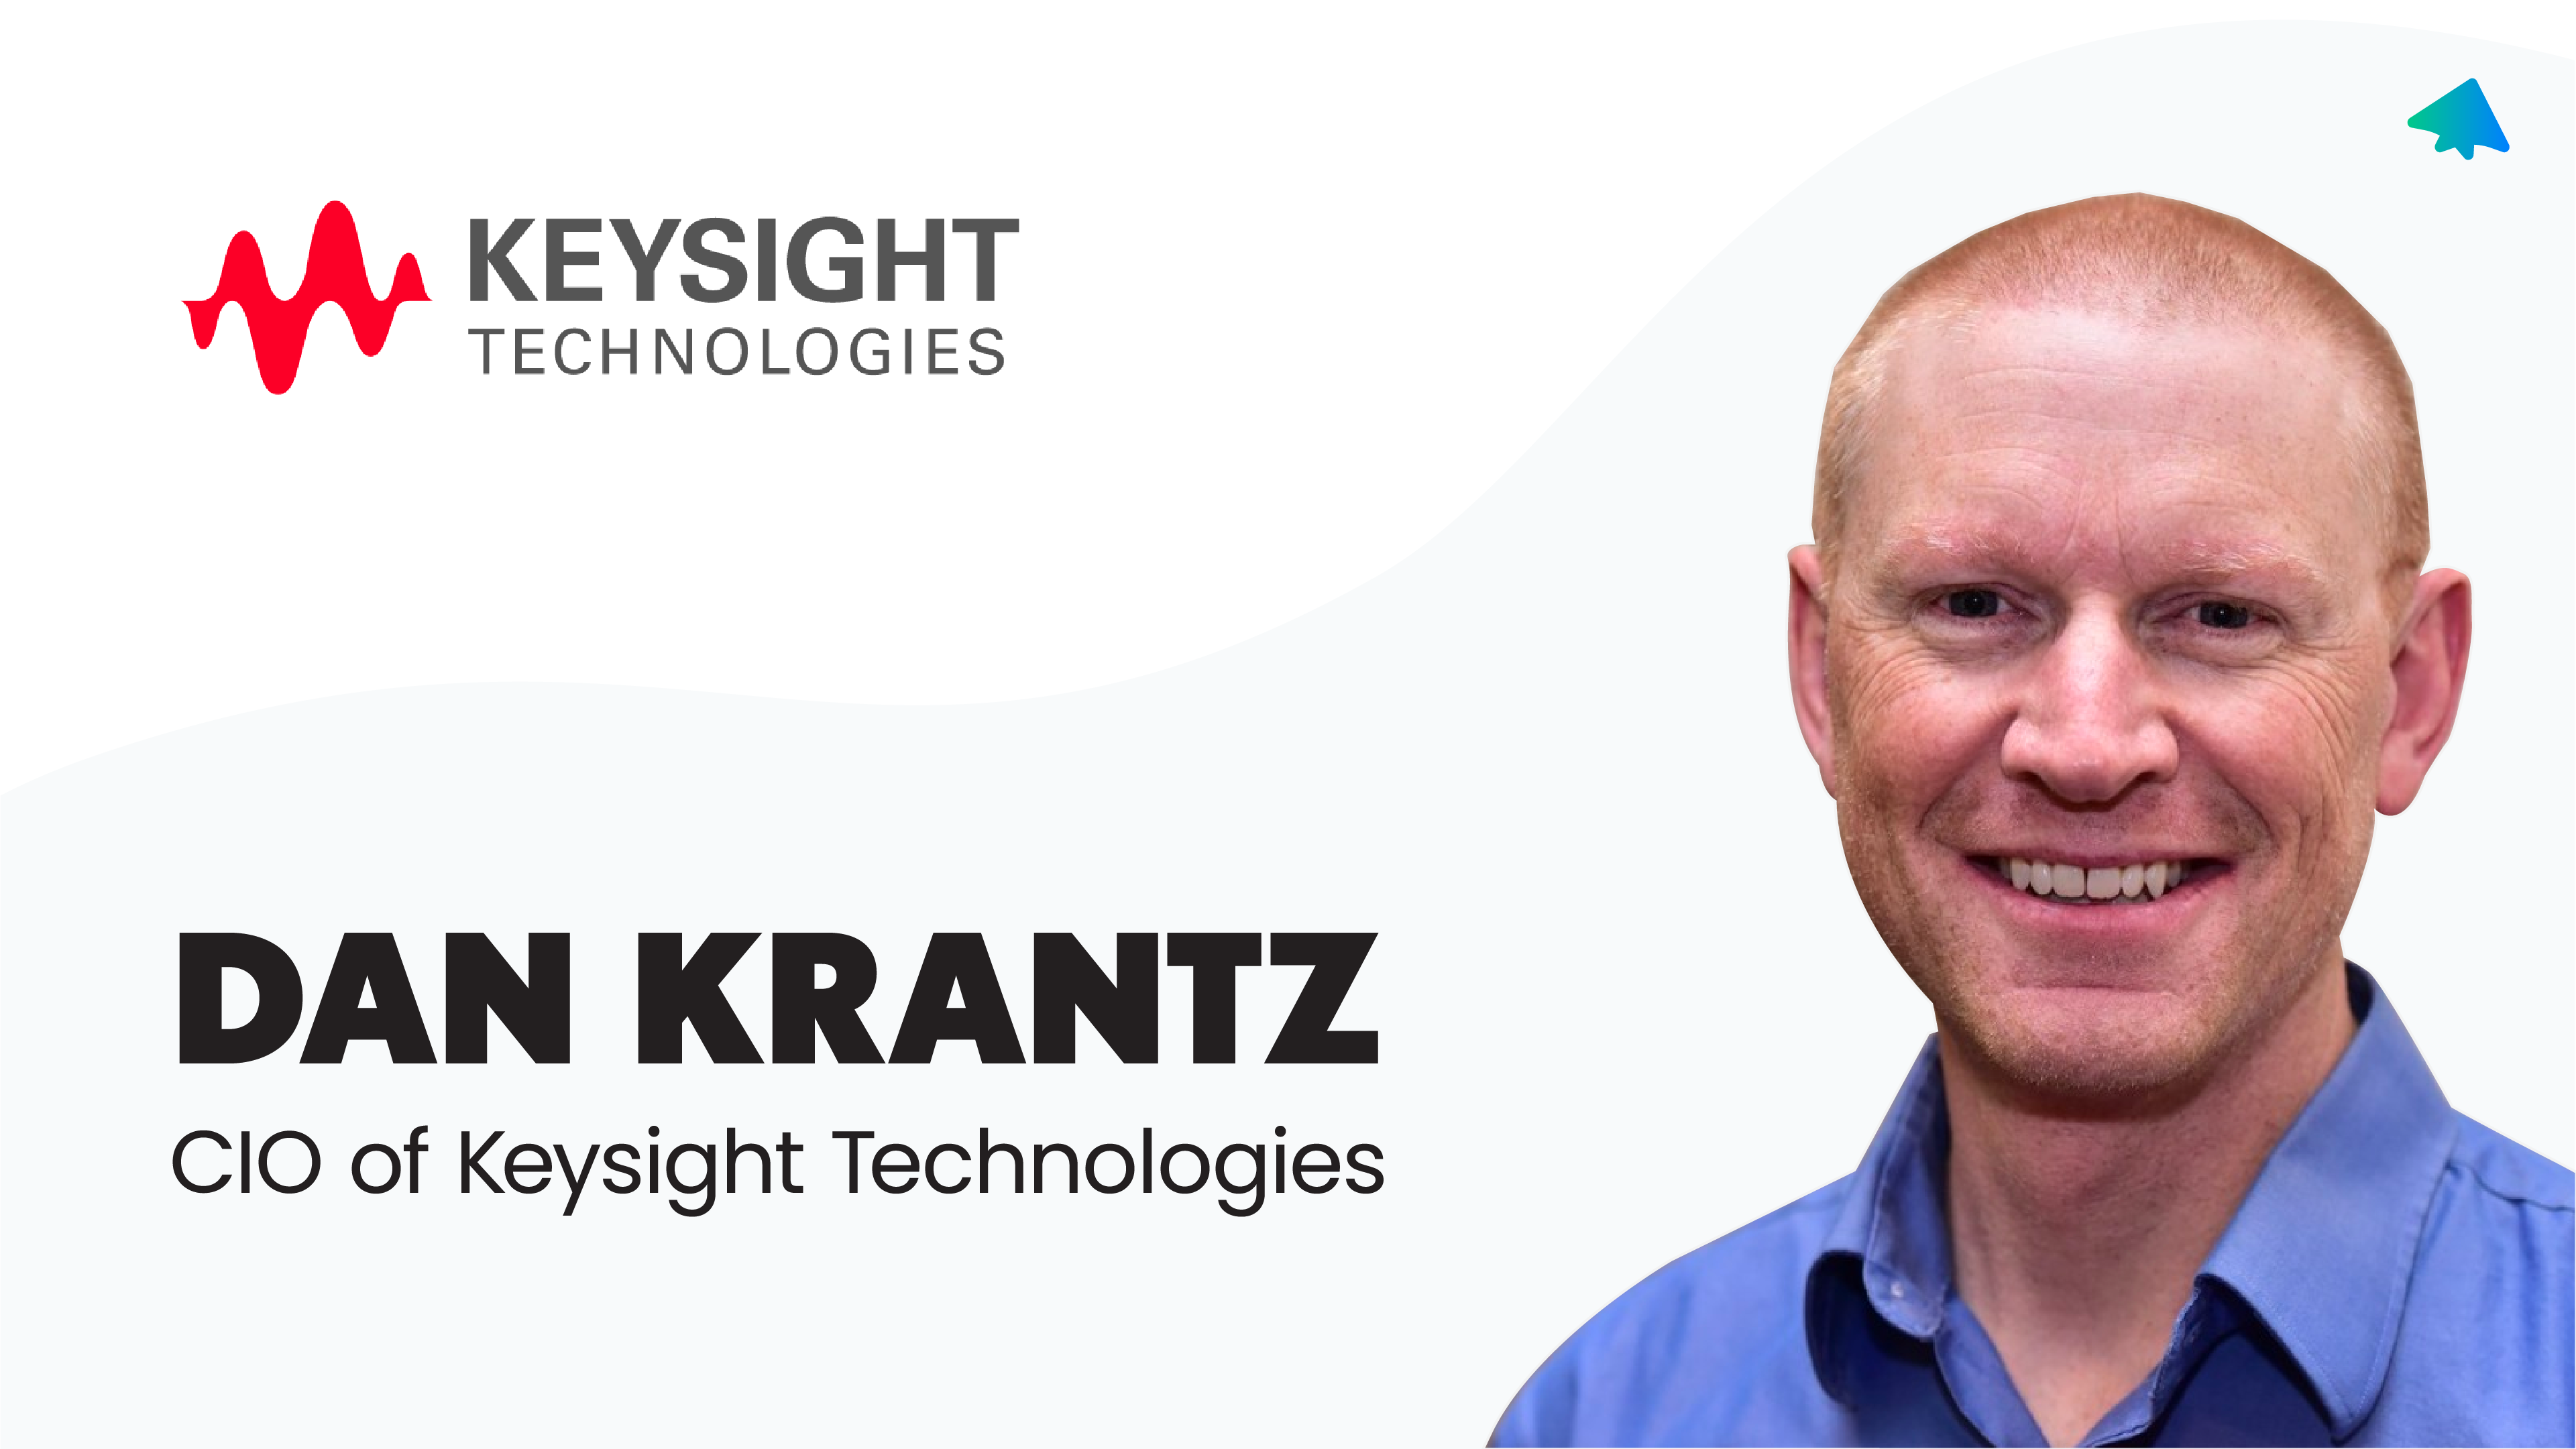 Keysight Technologies